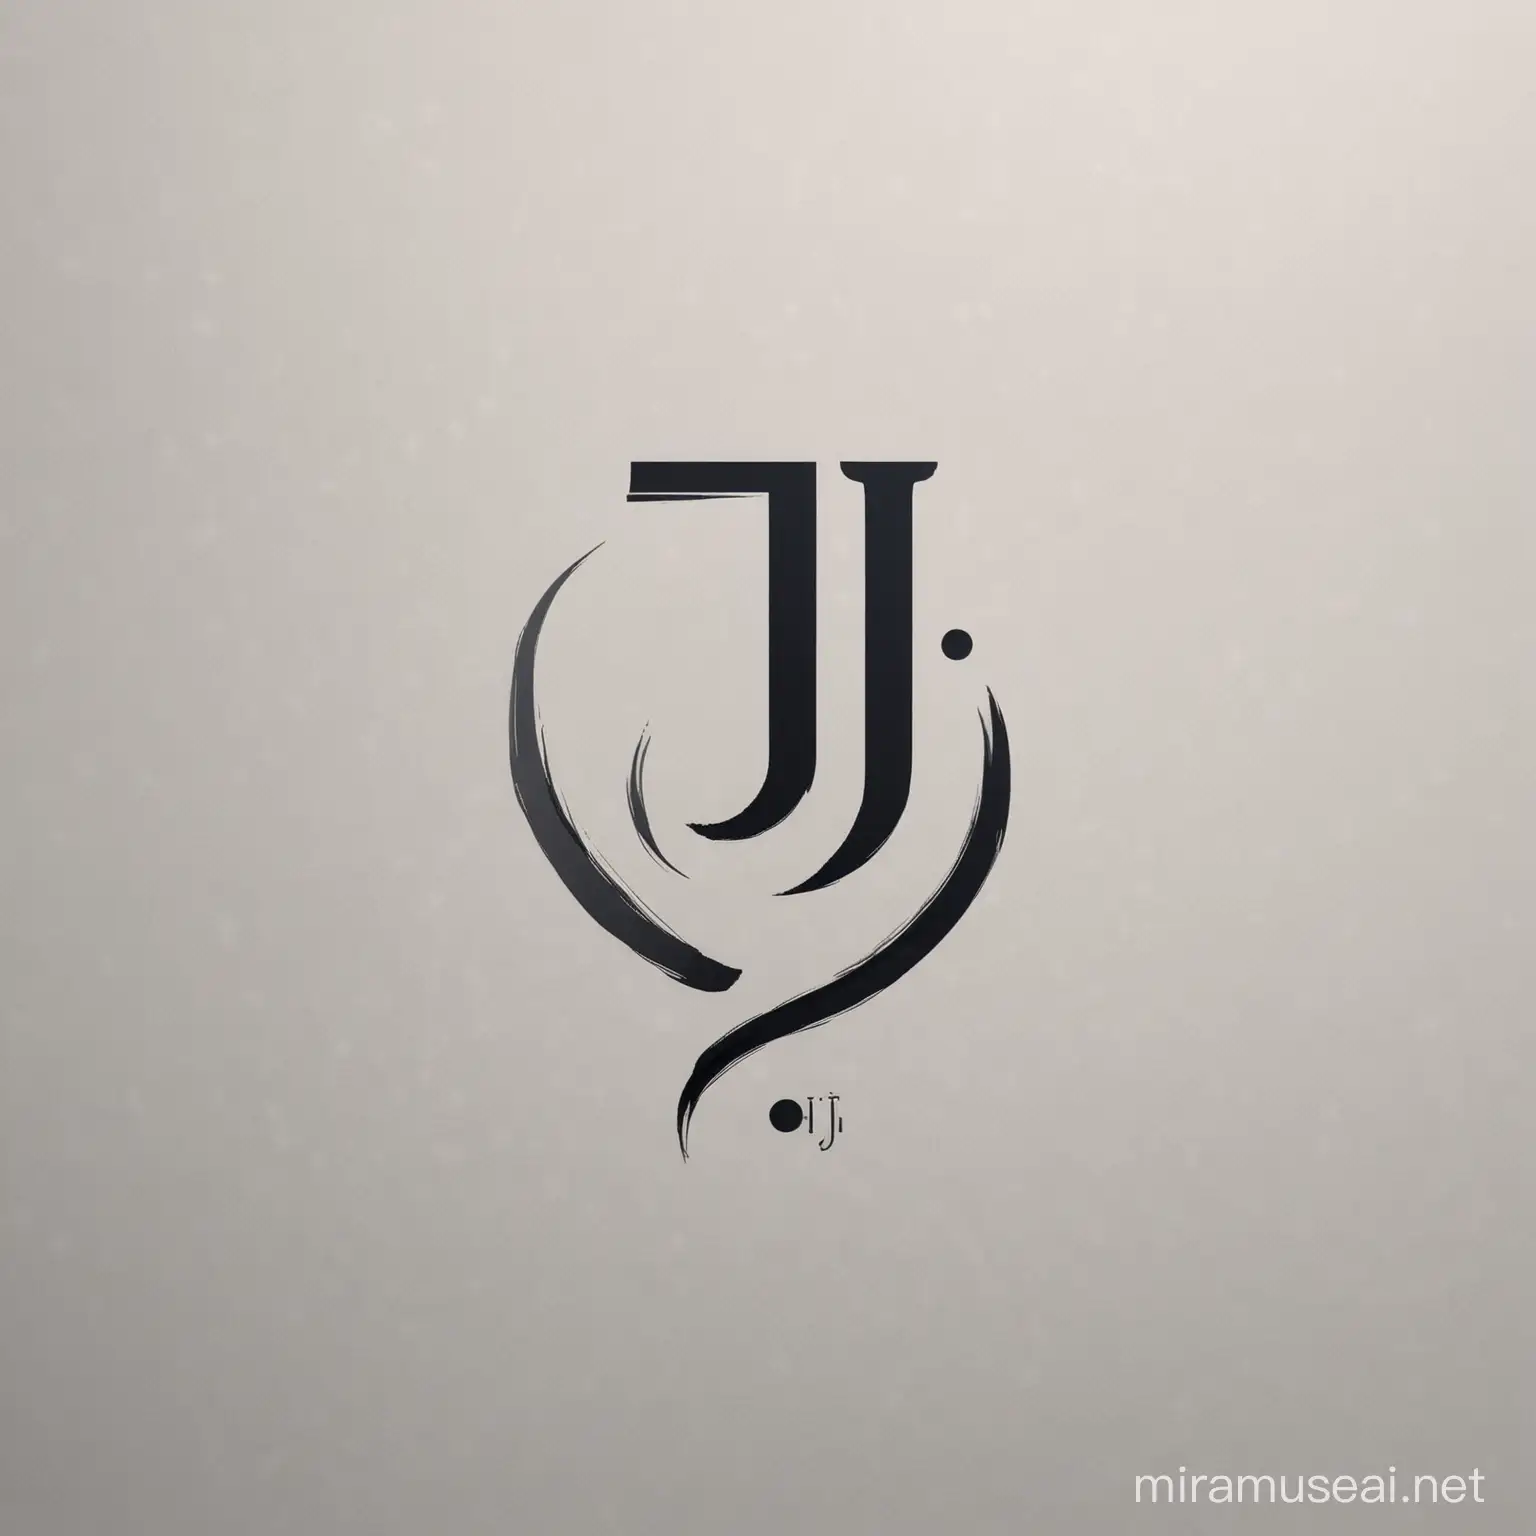 create me a simple minimalistic vector logo design using the initials JJ